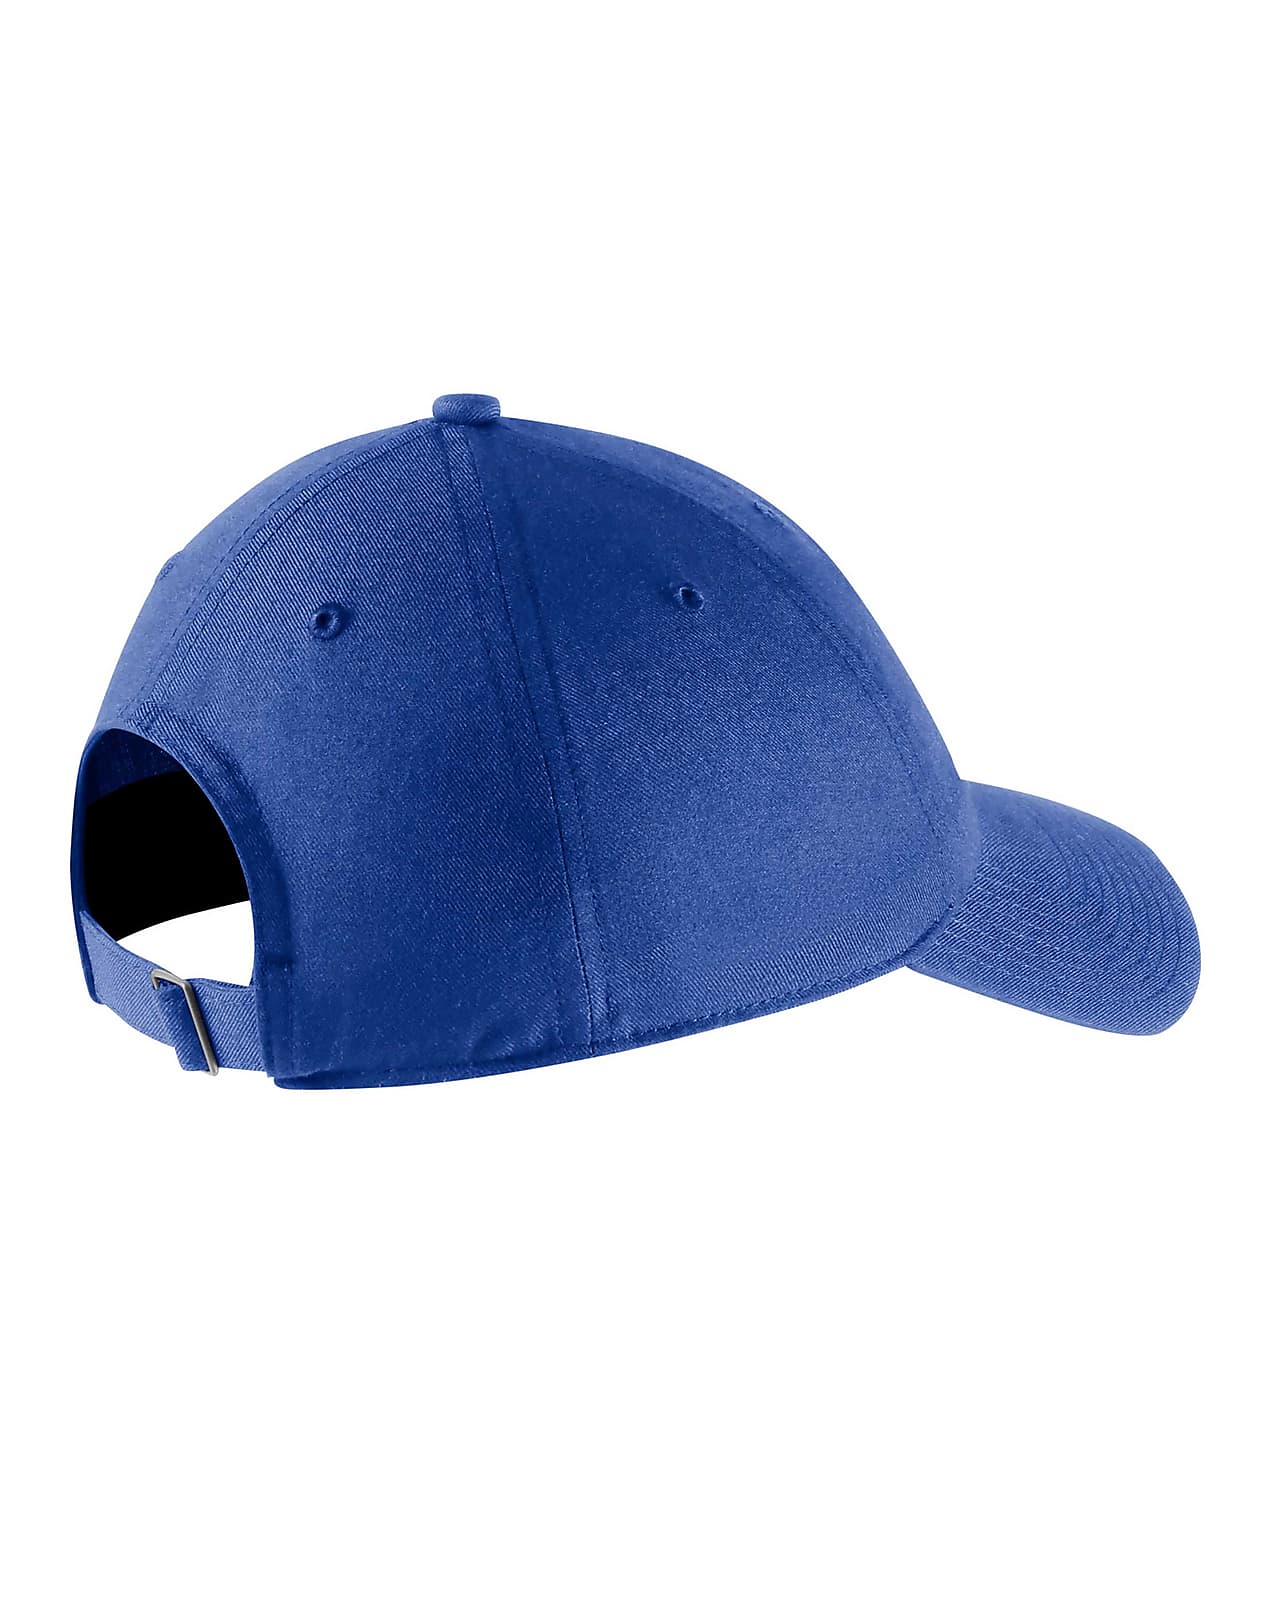 Men's cap - blue H086